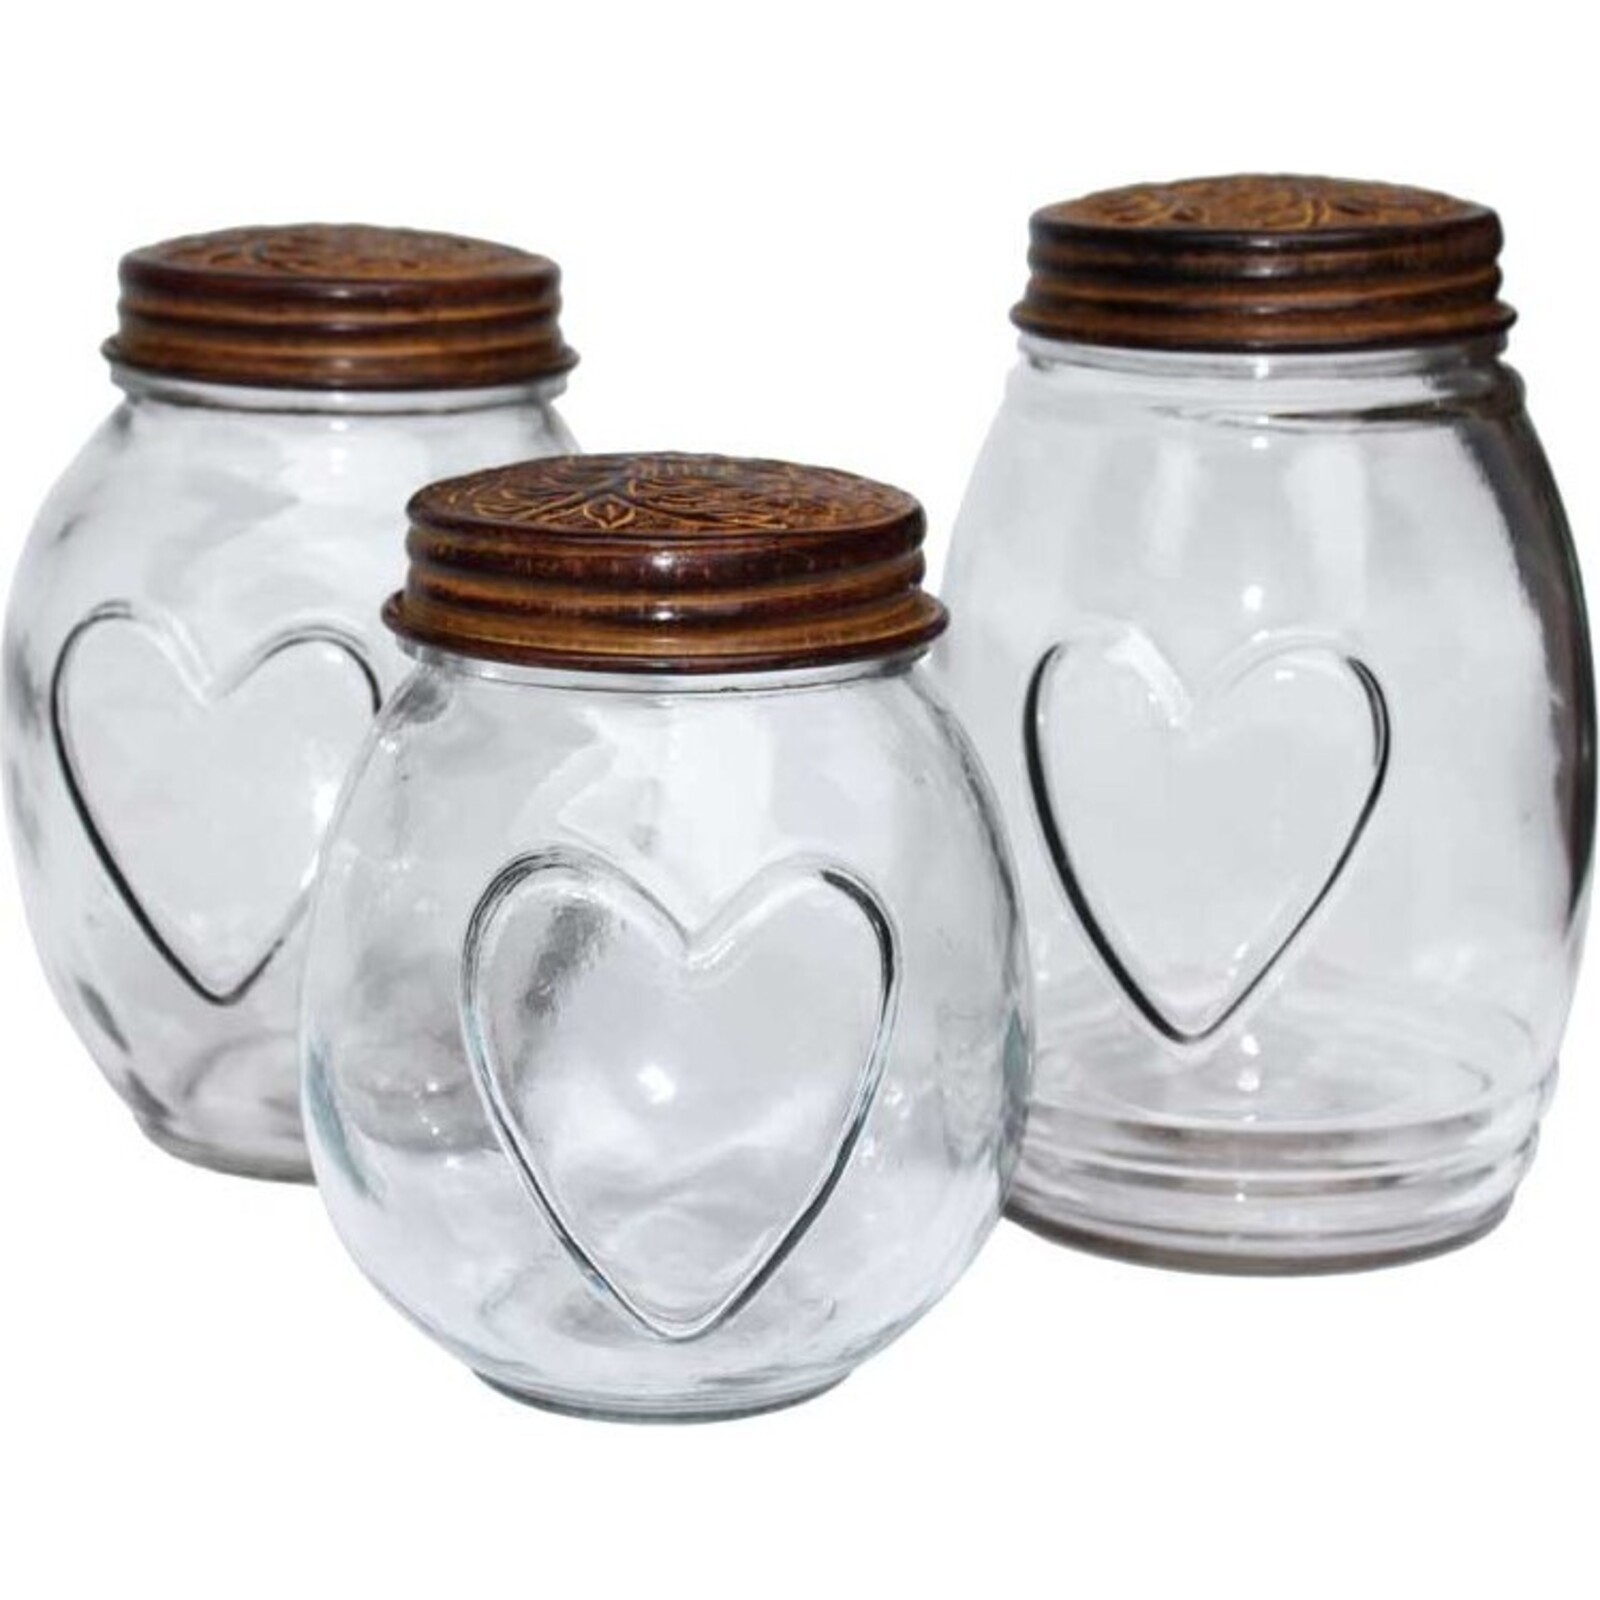 Glass Jar - Chetai Small